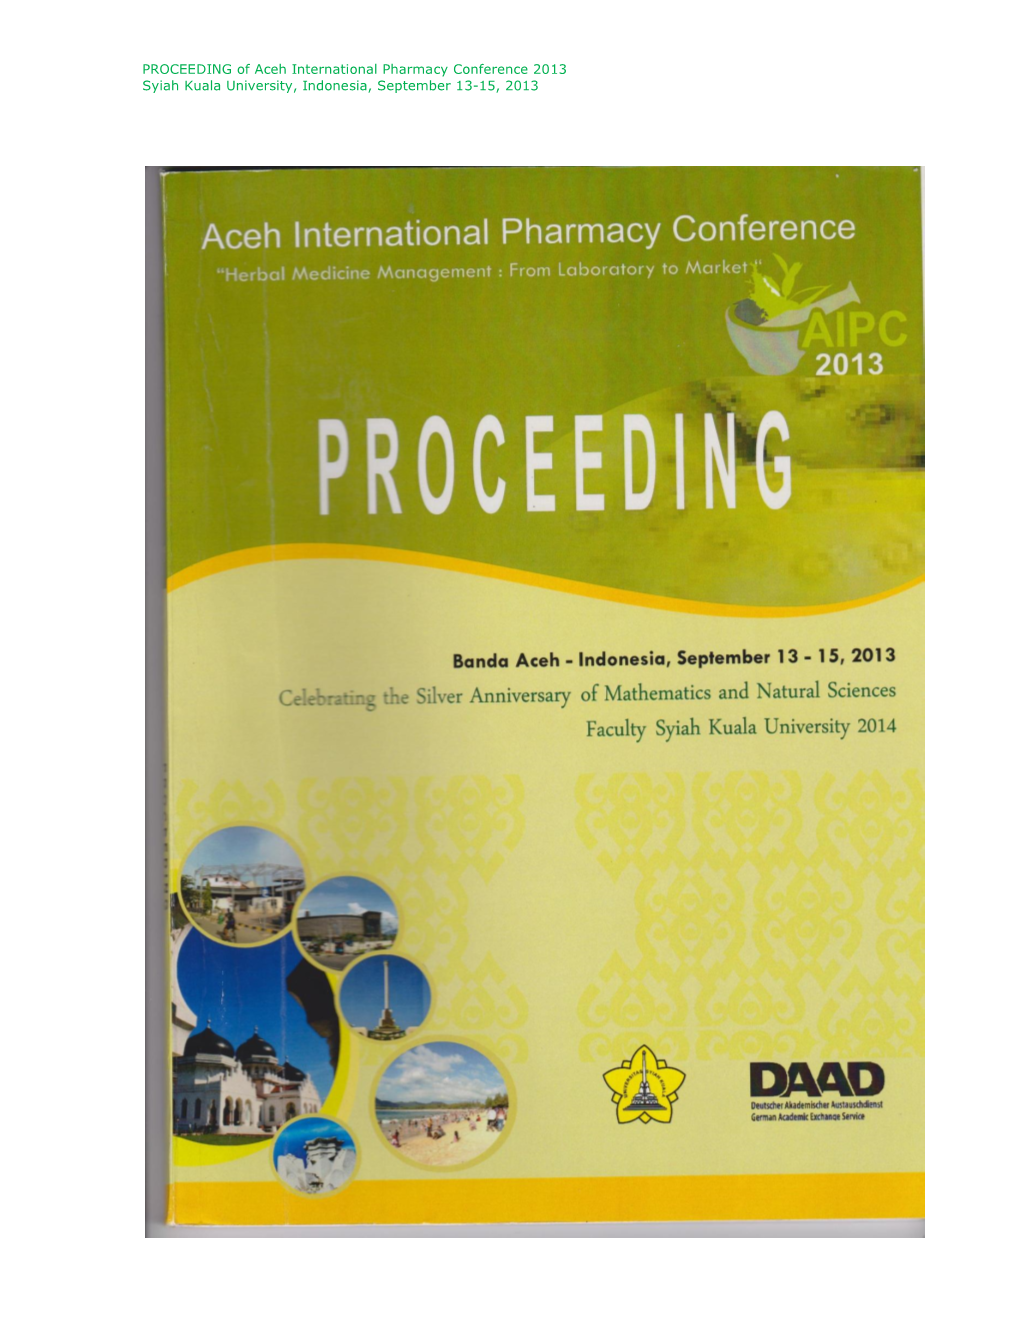 PROCEEDING of Aceh International Pharmacy Conference 2013 Syiah Kuala University, Indonesia, September 13-15, 2013